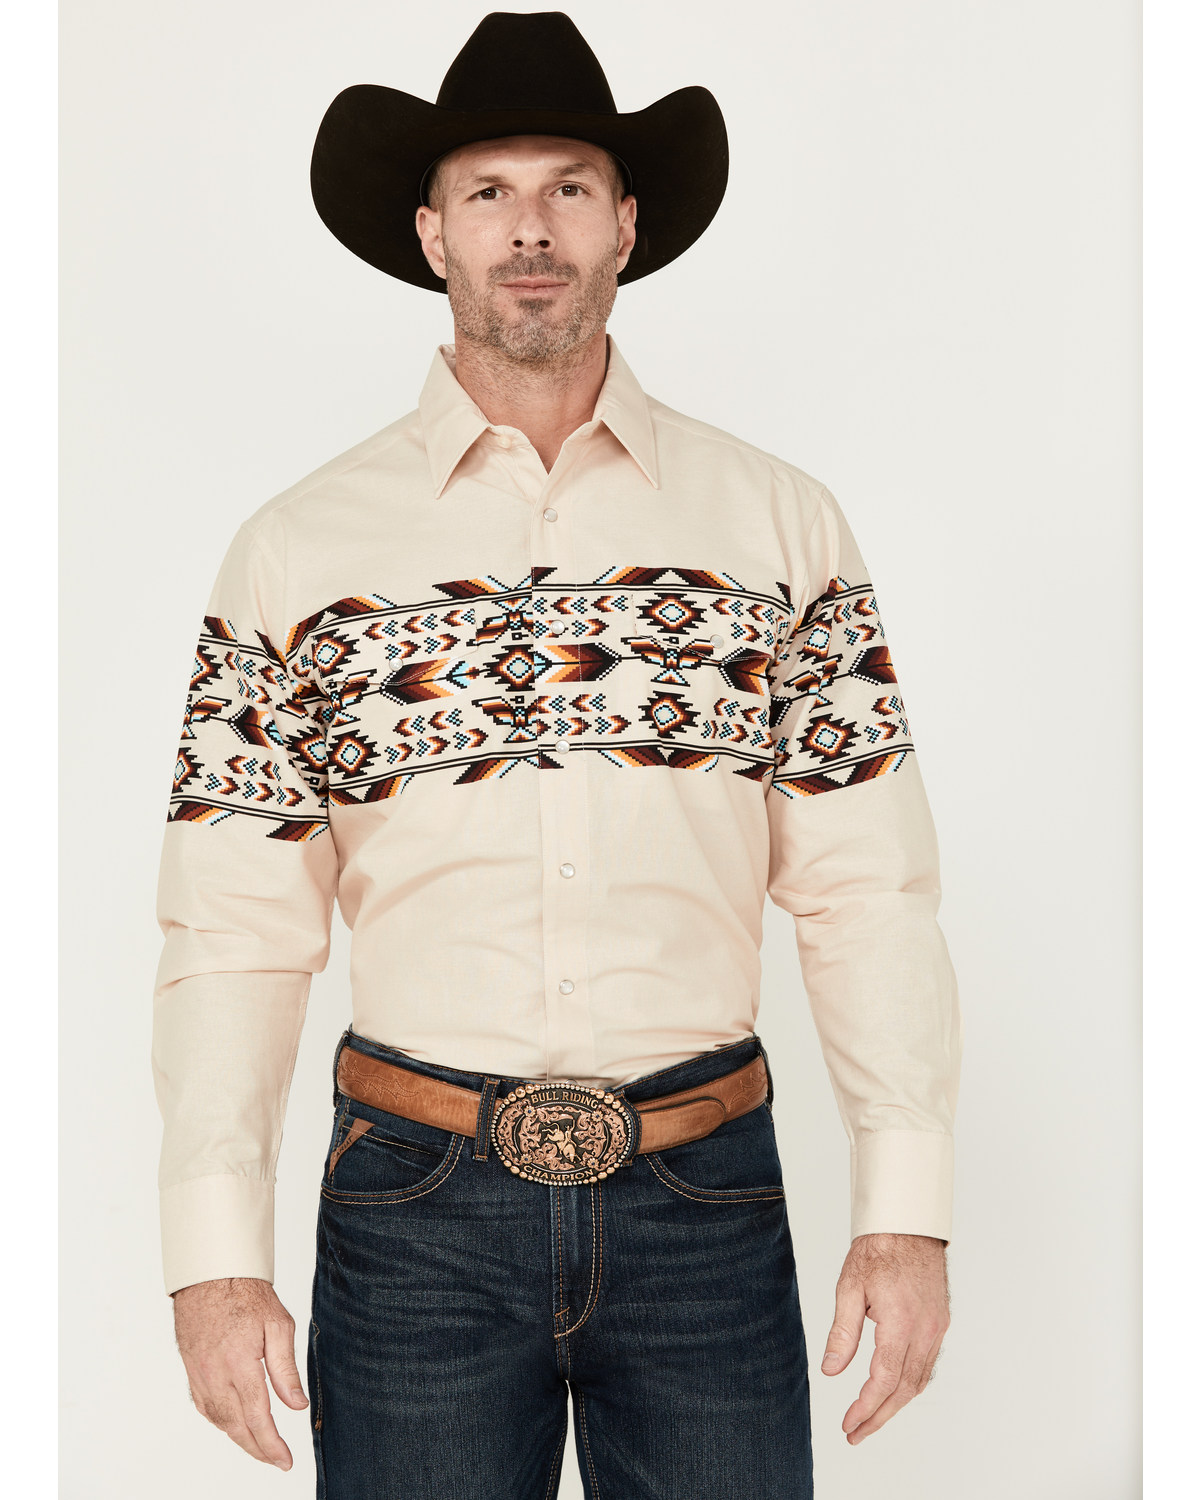 Panhandle Men's Southwestern Print Border Long Sleeve Pearl Snap Western Shirt